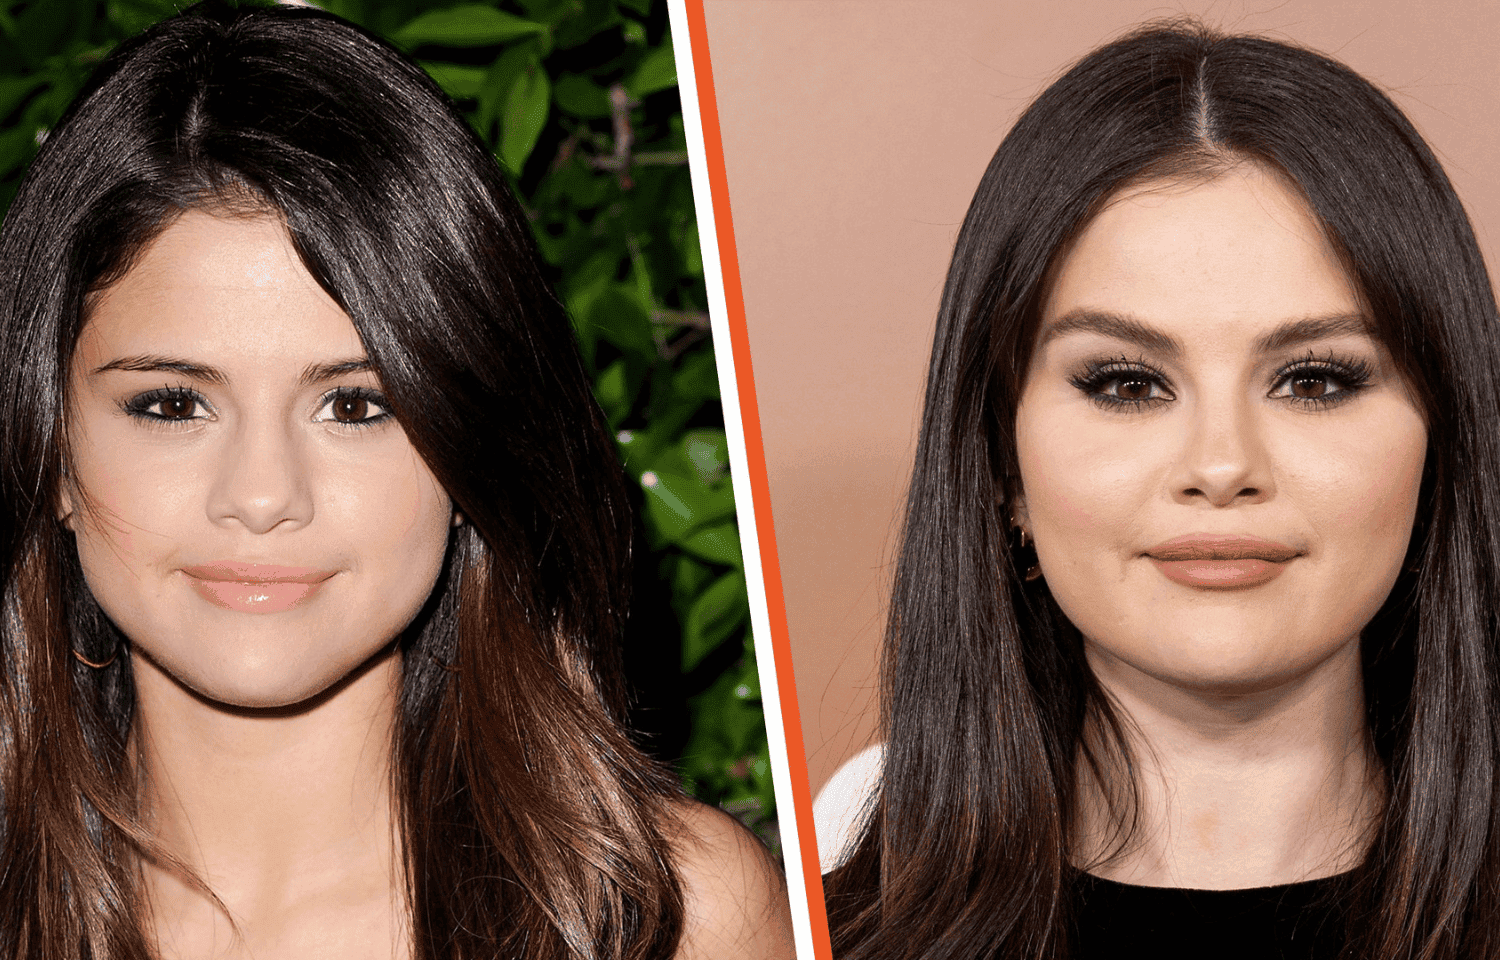 Did Selena Gomez Get Plastic Surgery?